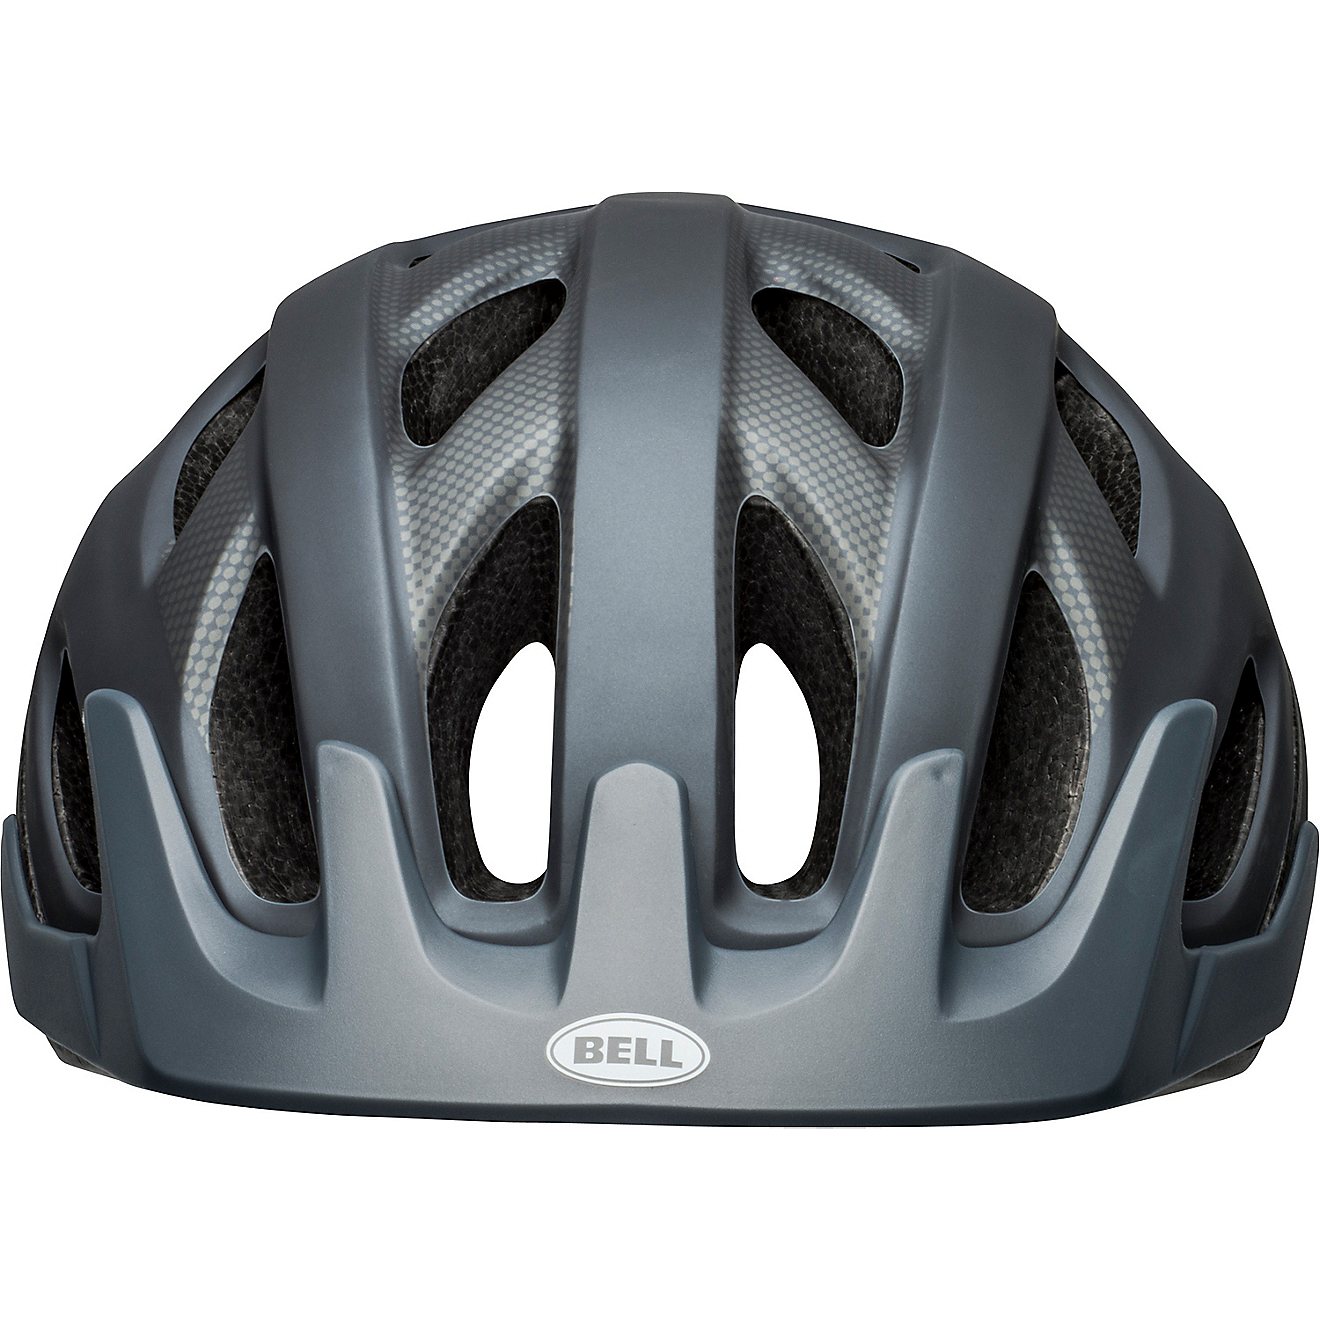 Bell Men's Passage Bike Helmet with Integrated Lights                                                                            - view number 4